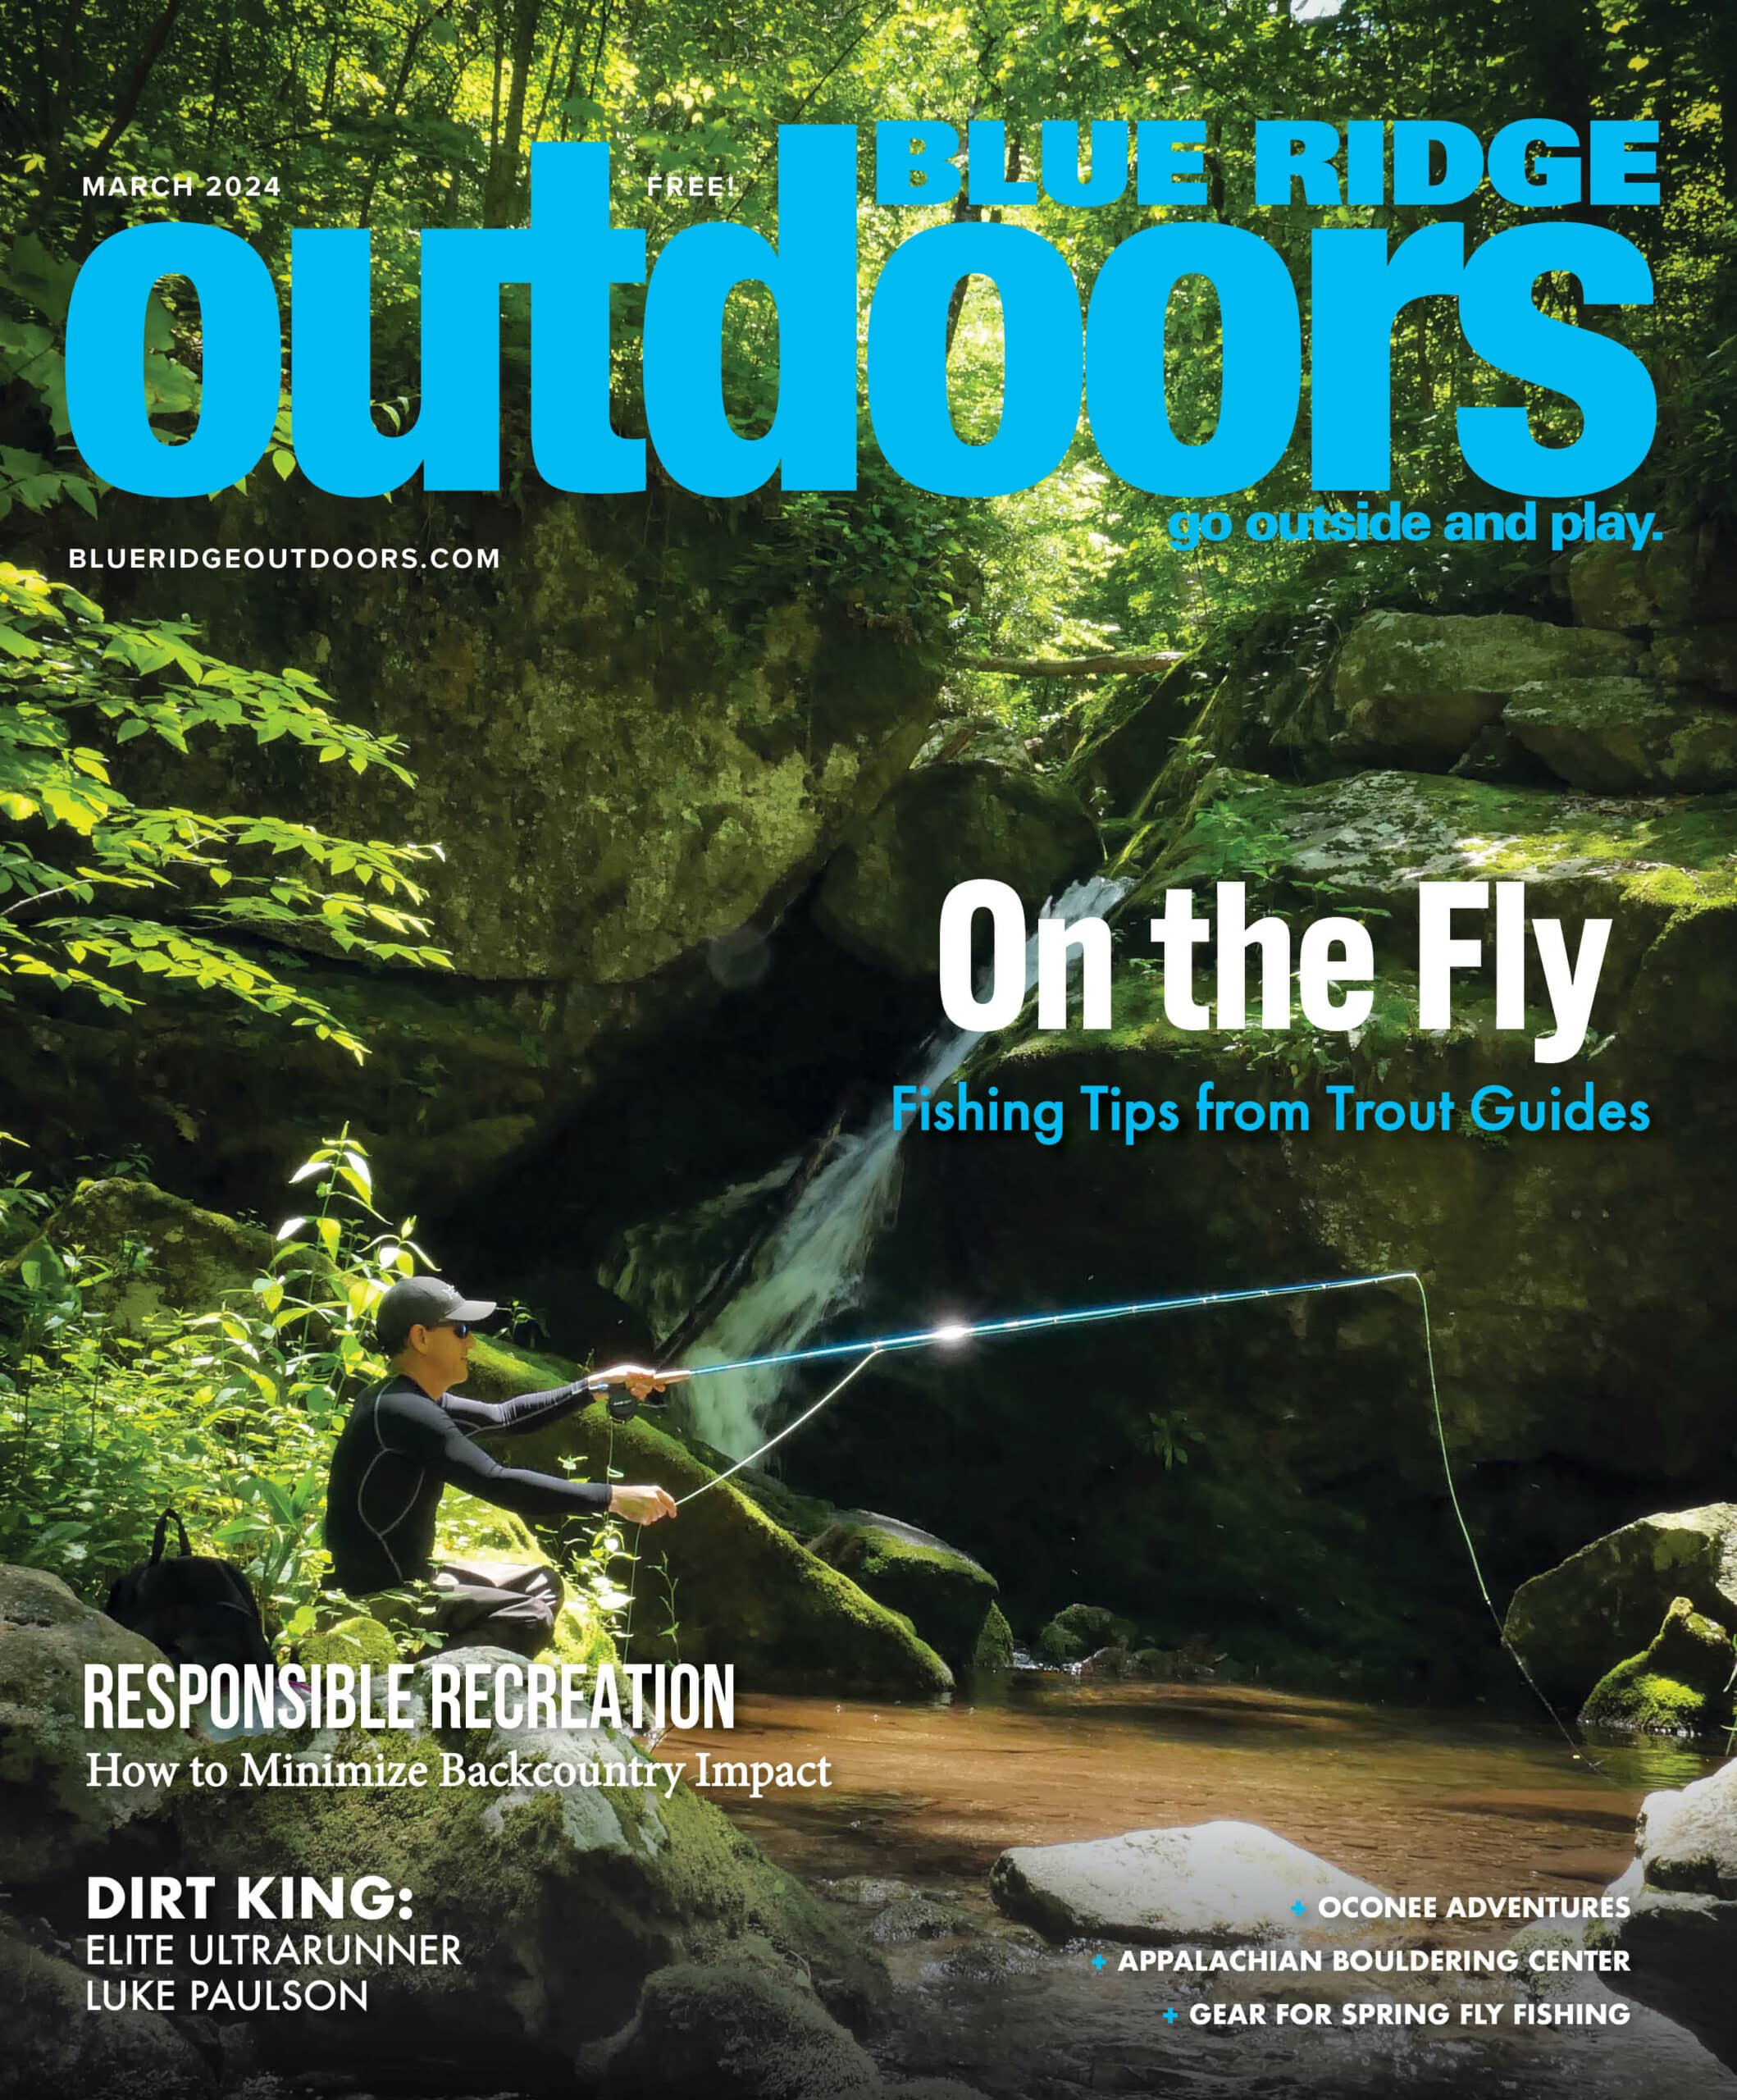 25 Years of Blue Ridge Outdoors - Go Outside - Blue Ridge Outdoors Magazine